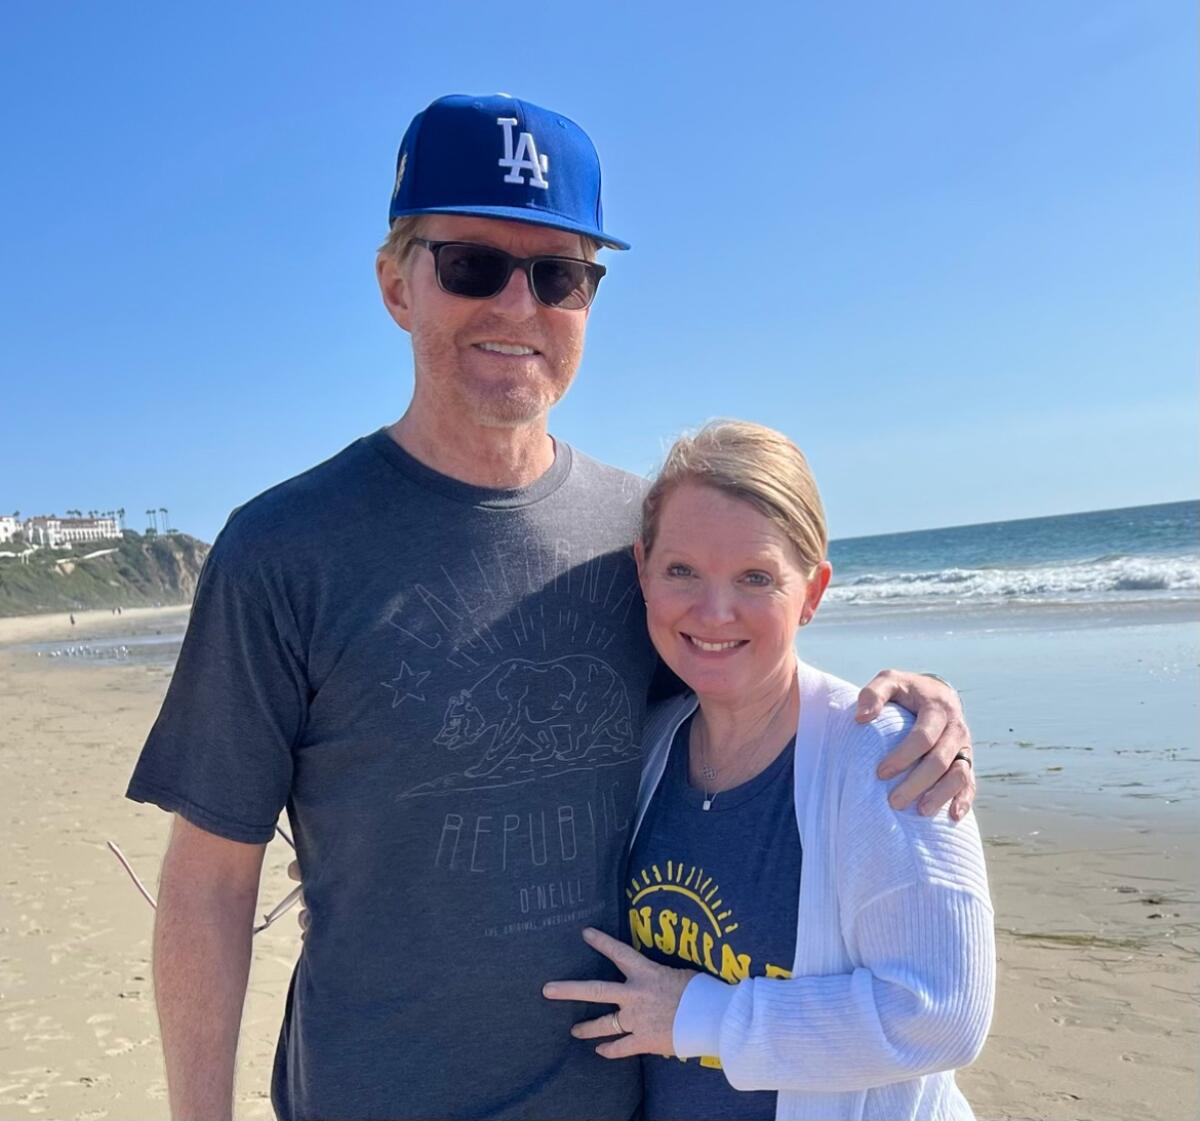 Todd Sand and wife Jenni Meno on the beach.